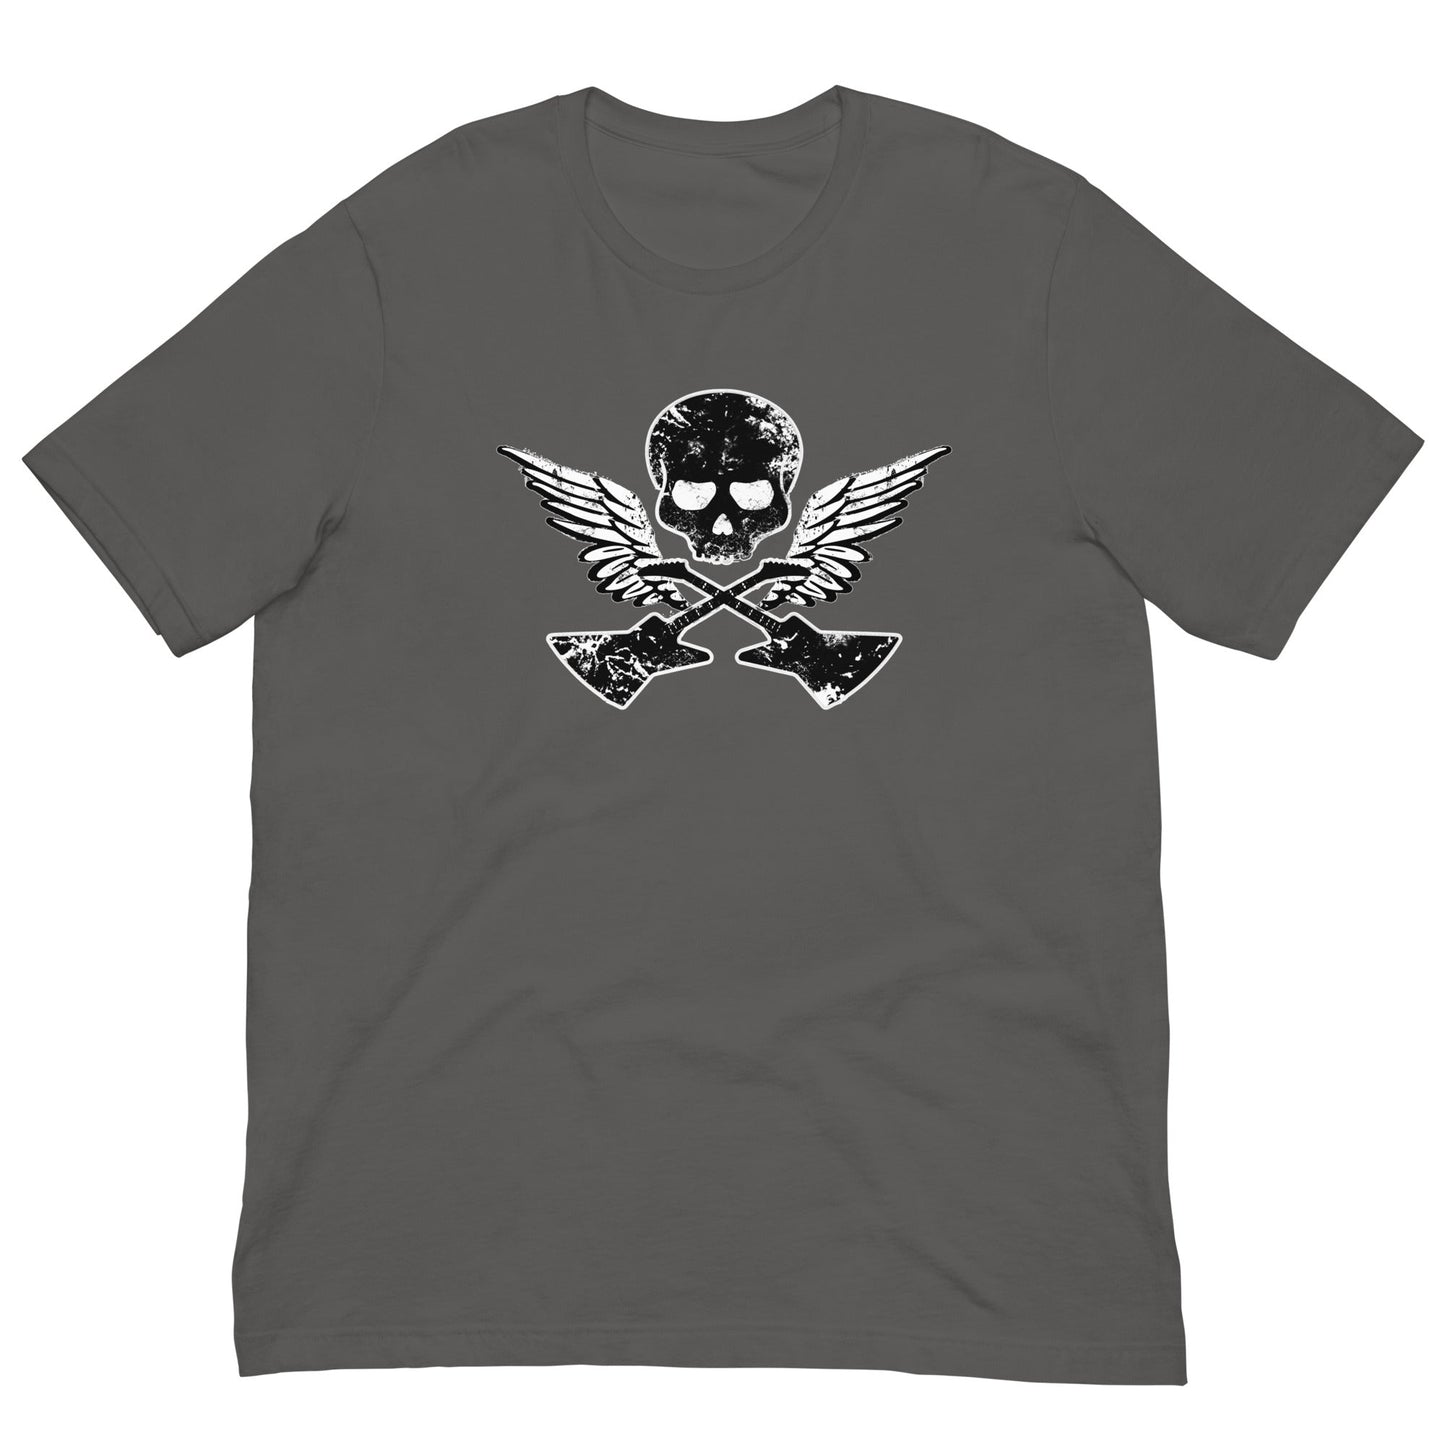 Scar Design T shirt Asphalt / S Skull Guitar Wings T-shirt